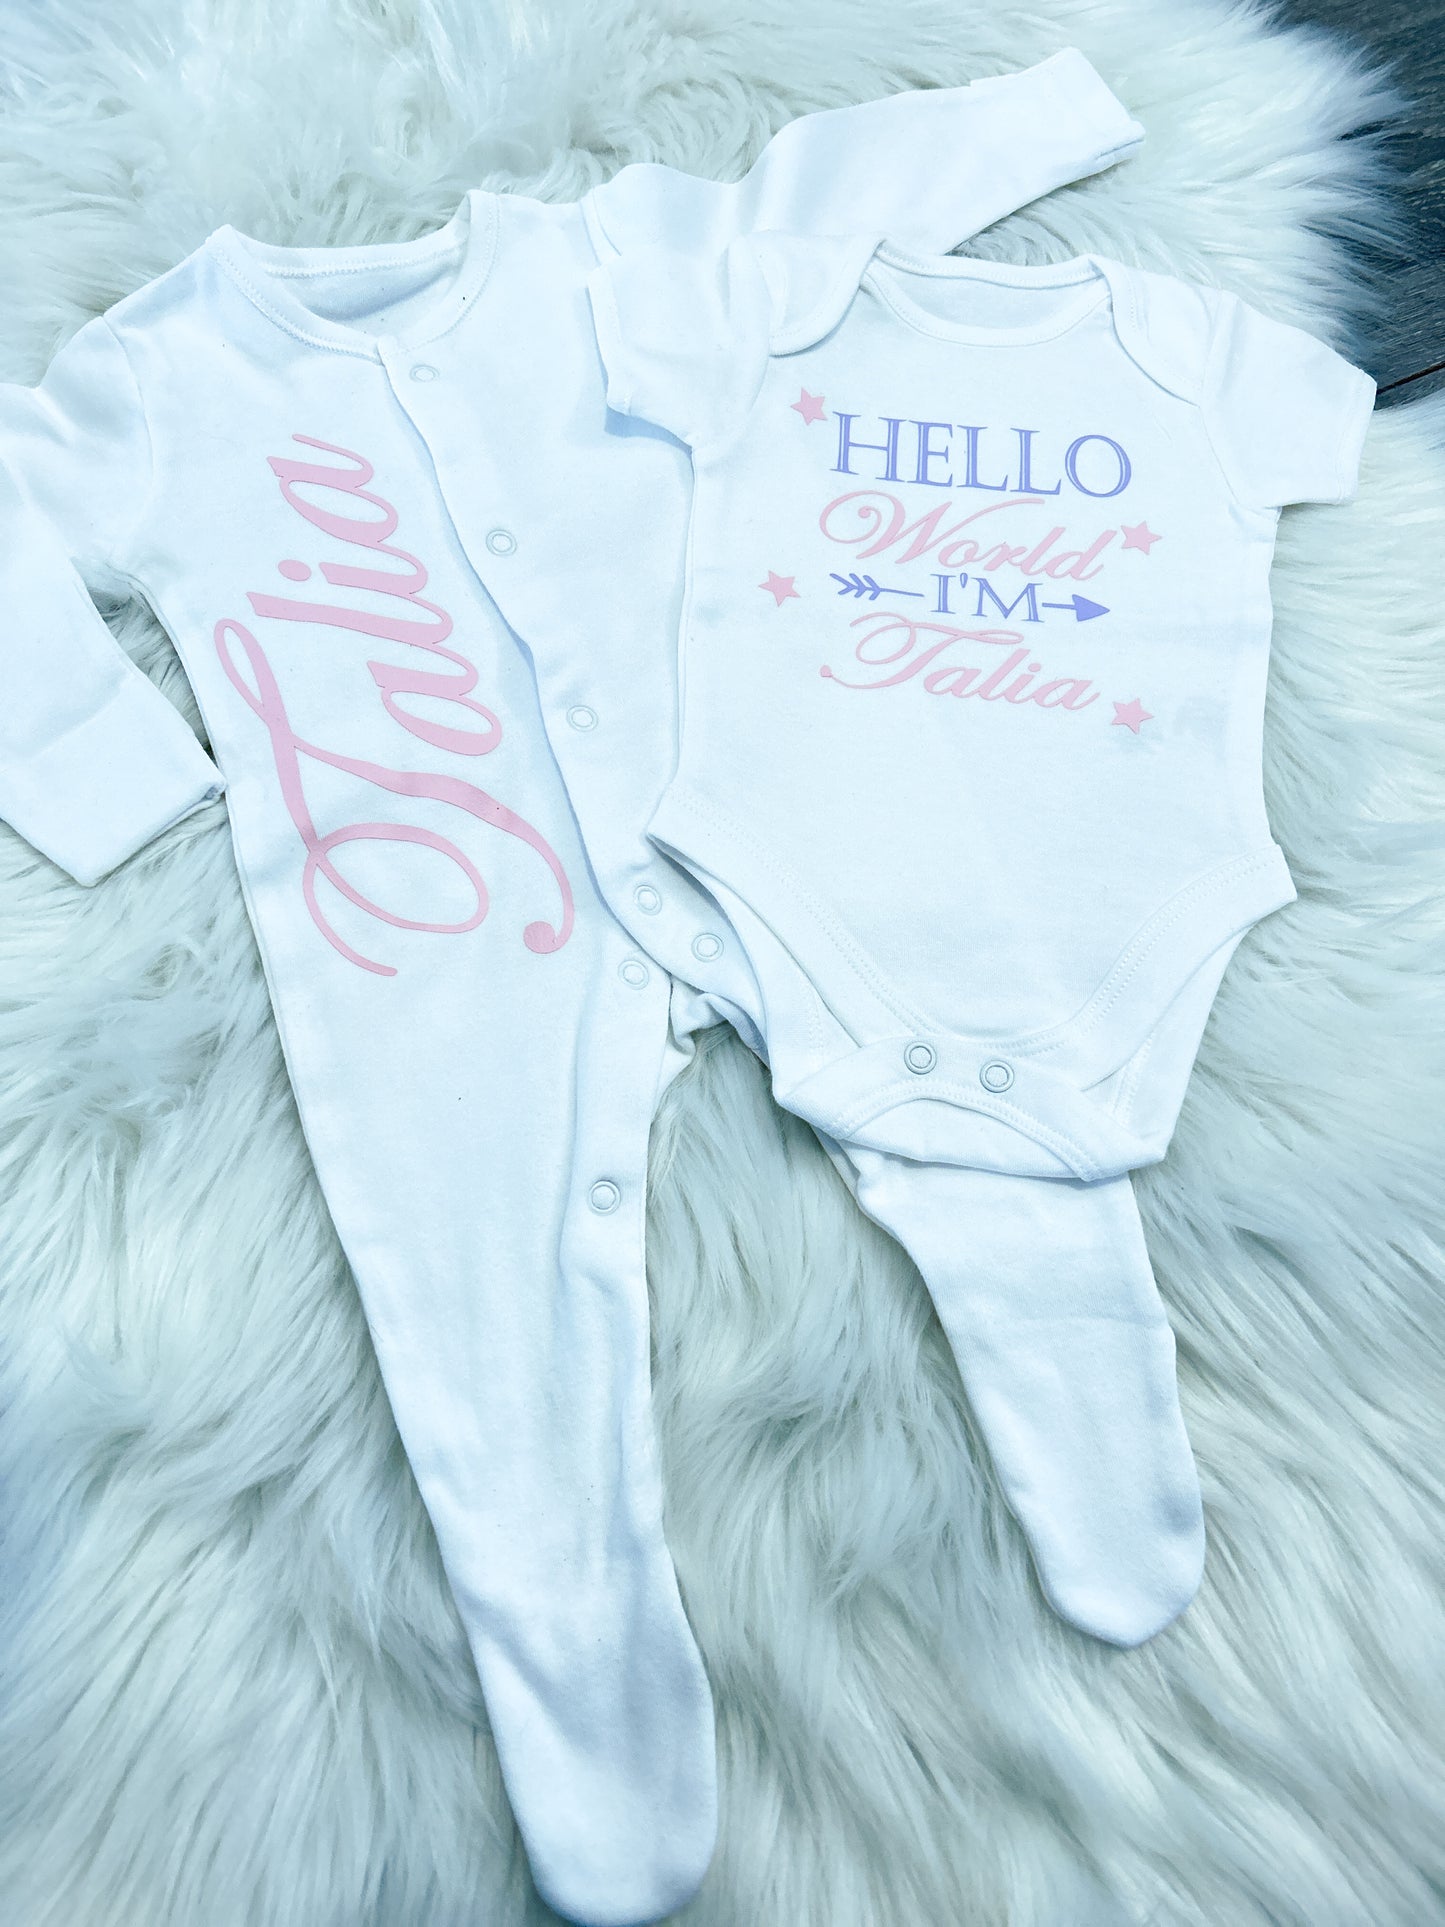 Personalised New Baby Hello World - Popper Front Sleepsuit & Bodysuit Set - Baby Set